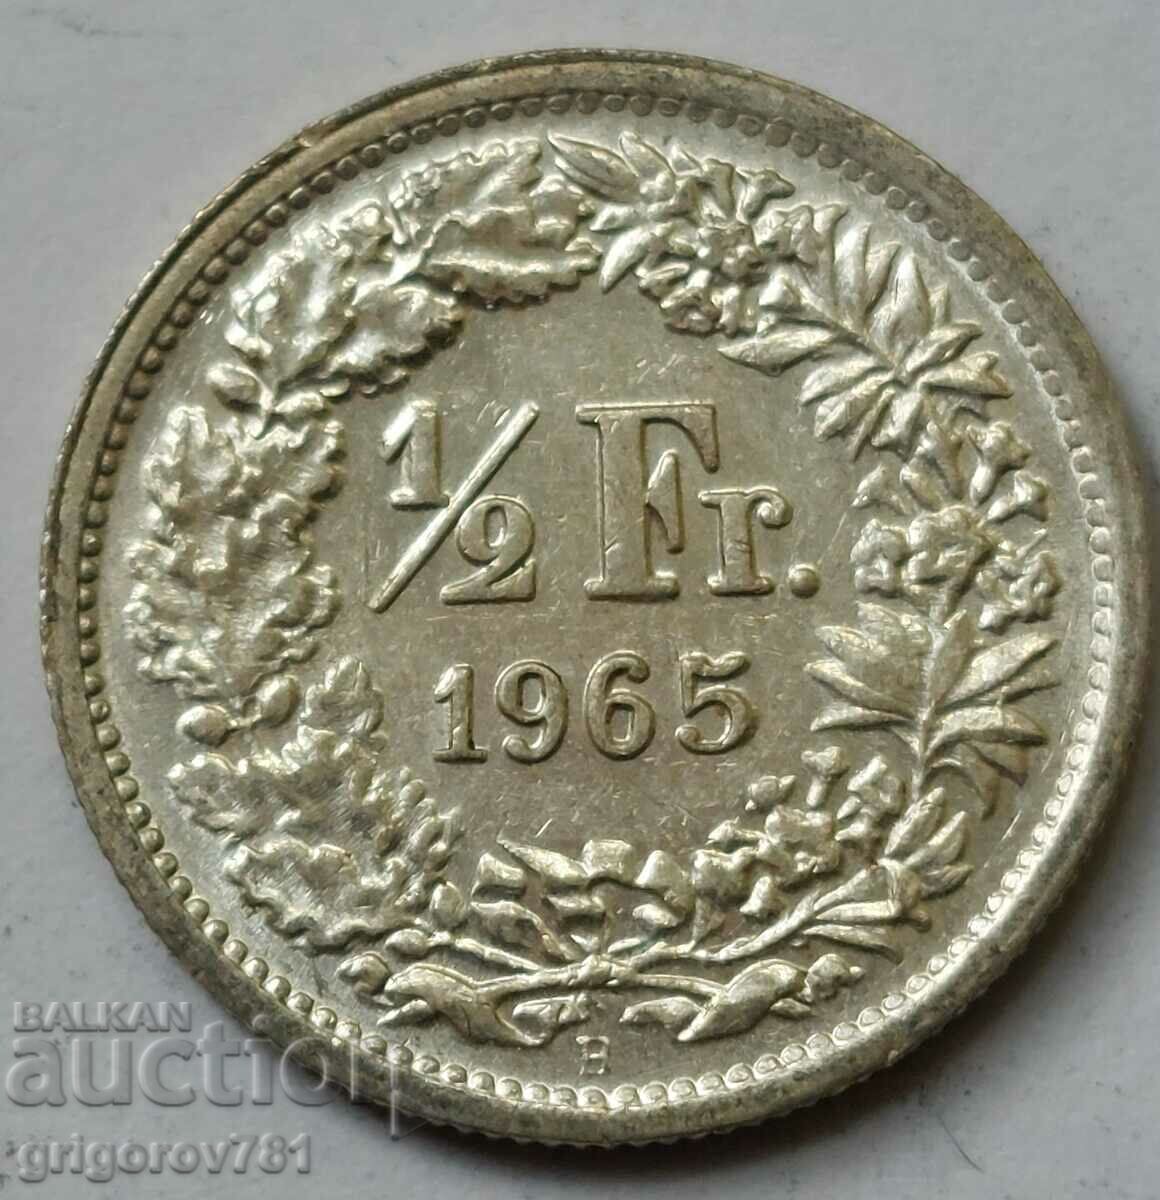 1/2 Franc Silver Switzerland 1965 B - Silver Coin #77